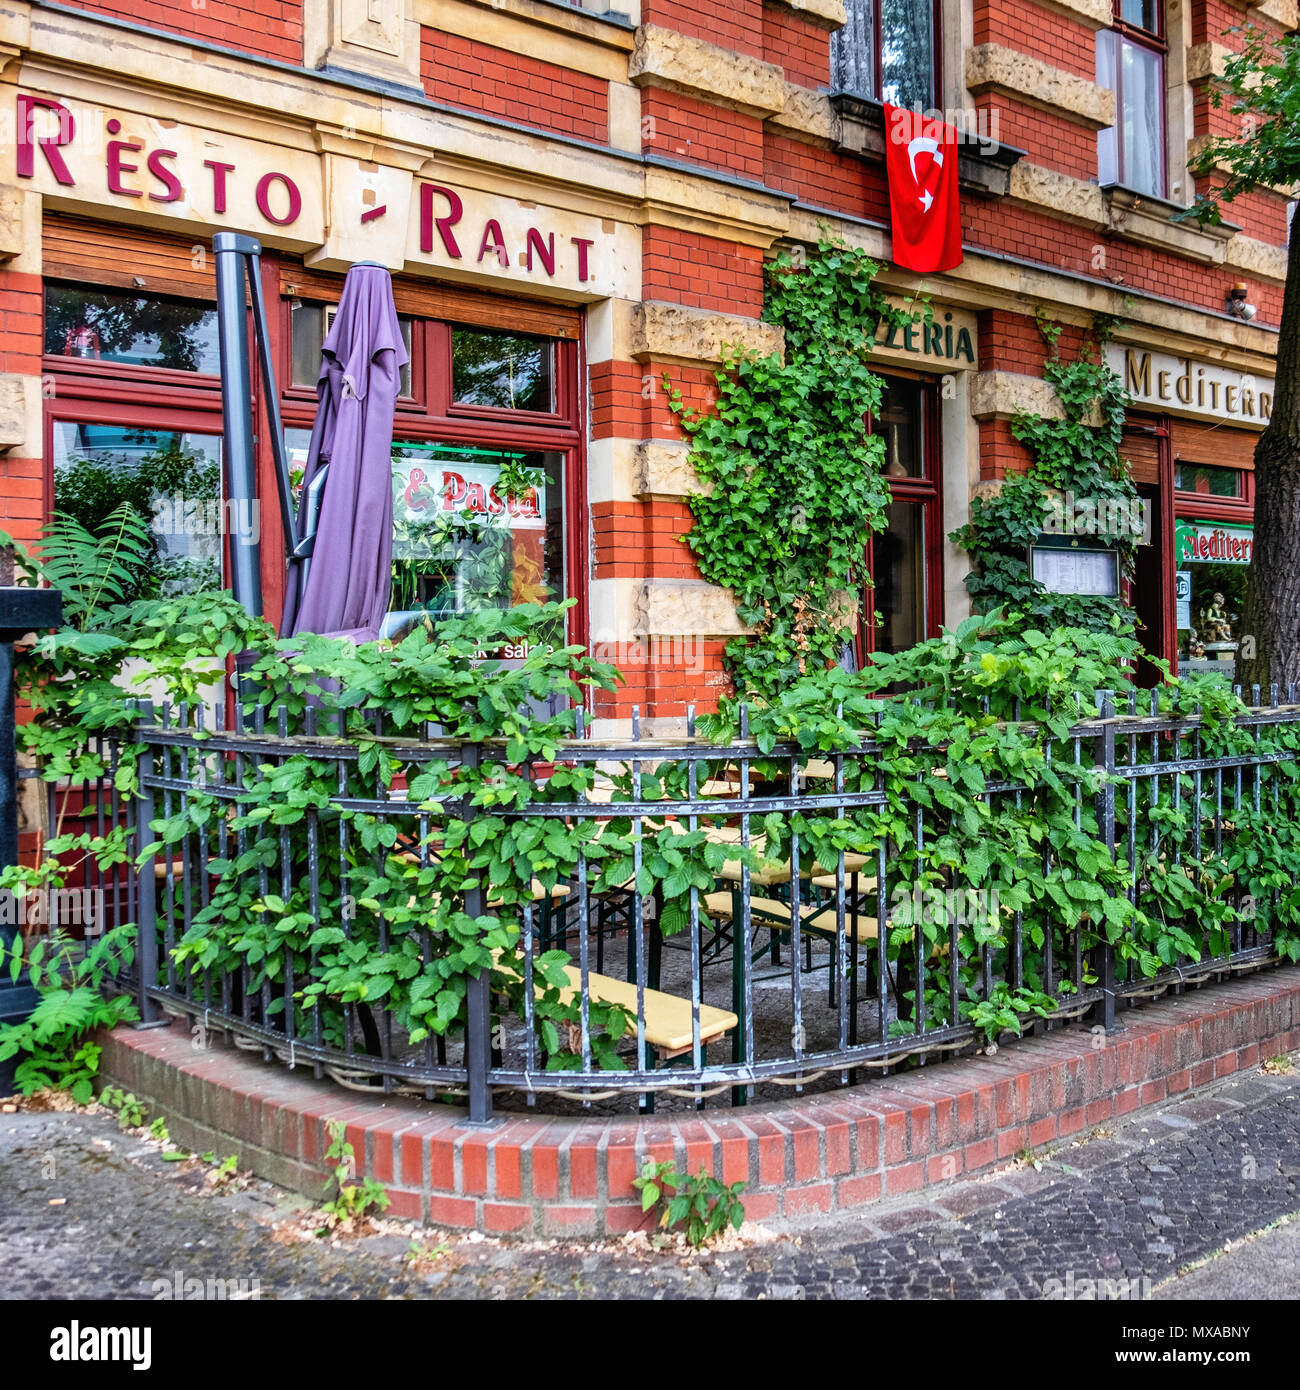 Berlin-Moabit. 30 Lehrterstasse, Histórico edificio de ladrillo con restaurante mediterráneo Foto de stock